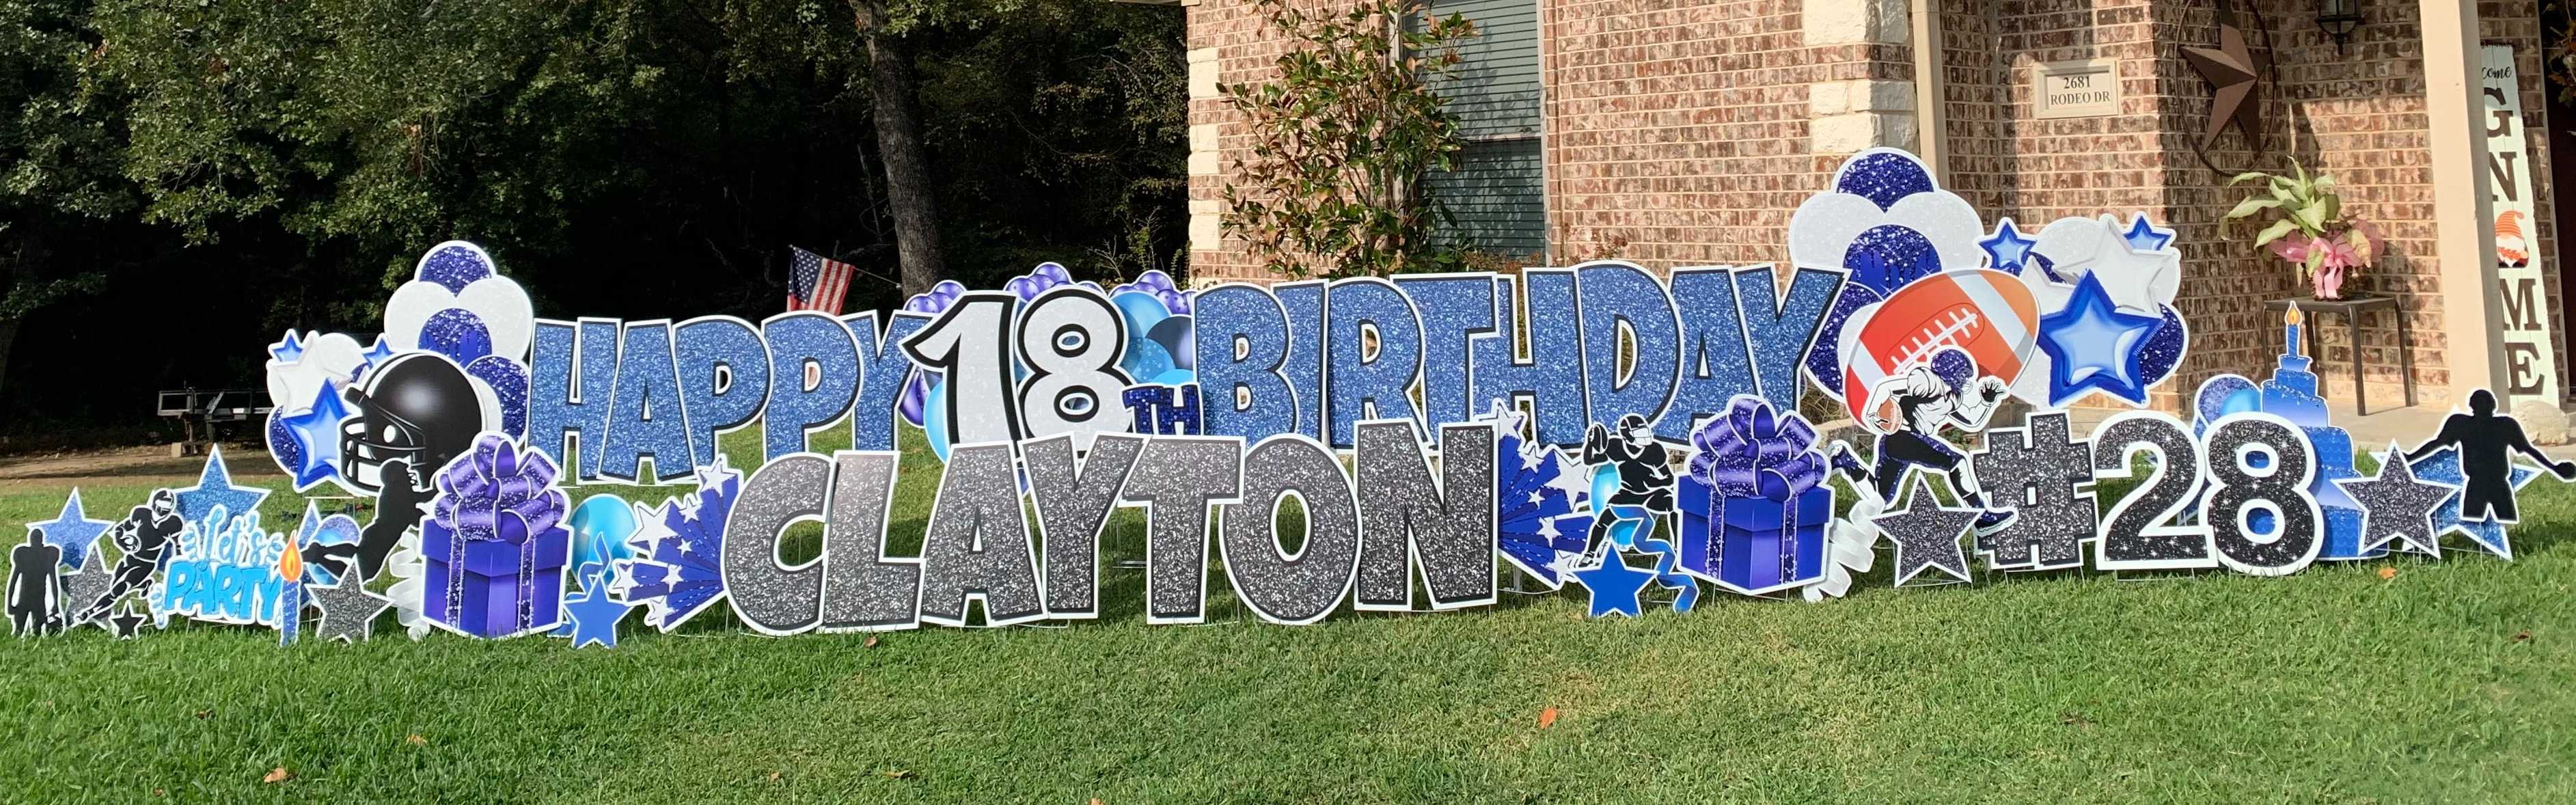 Yard card sign happy birthday clayton 